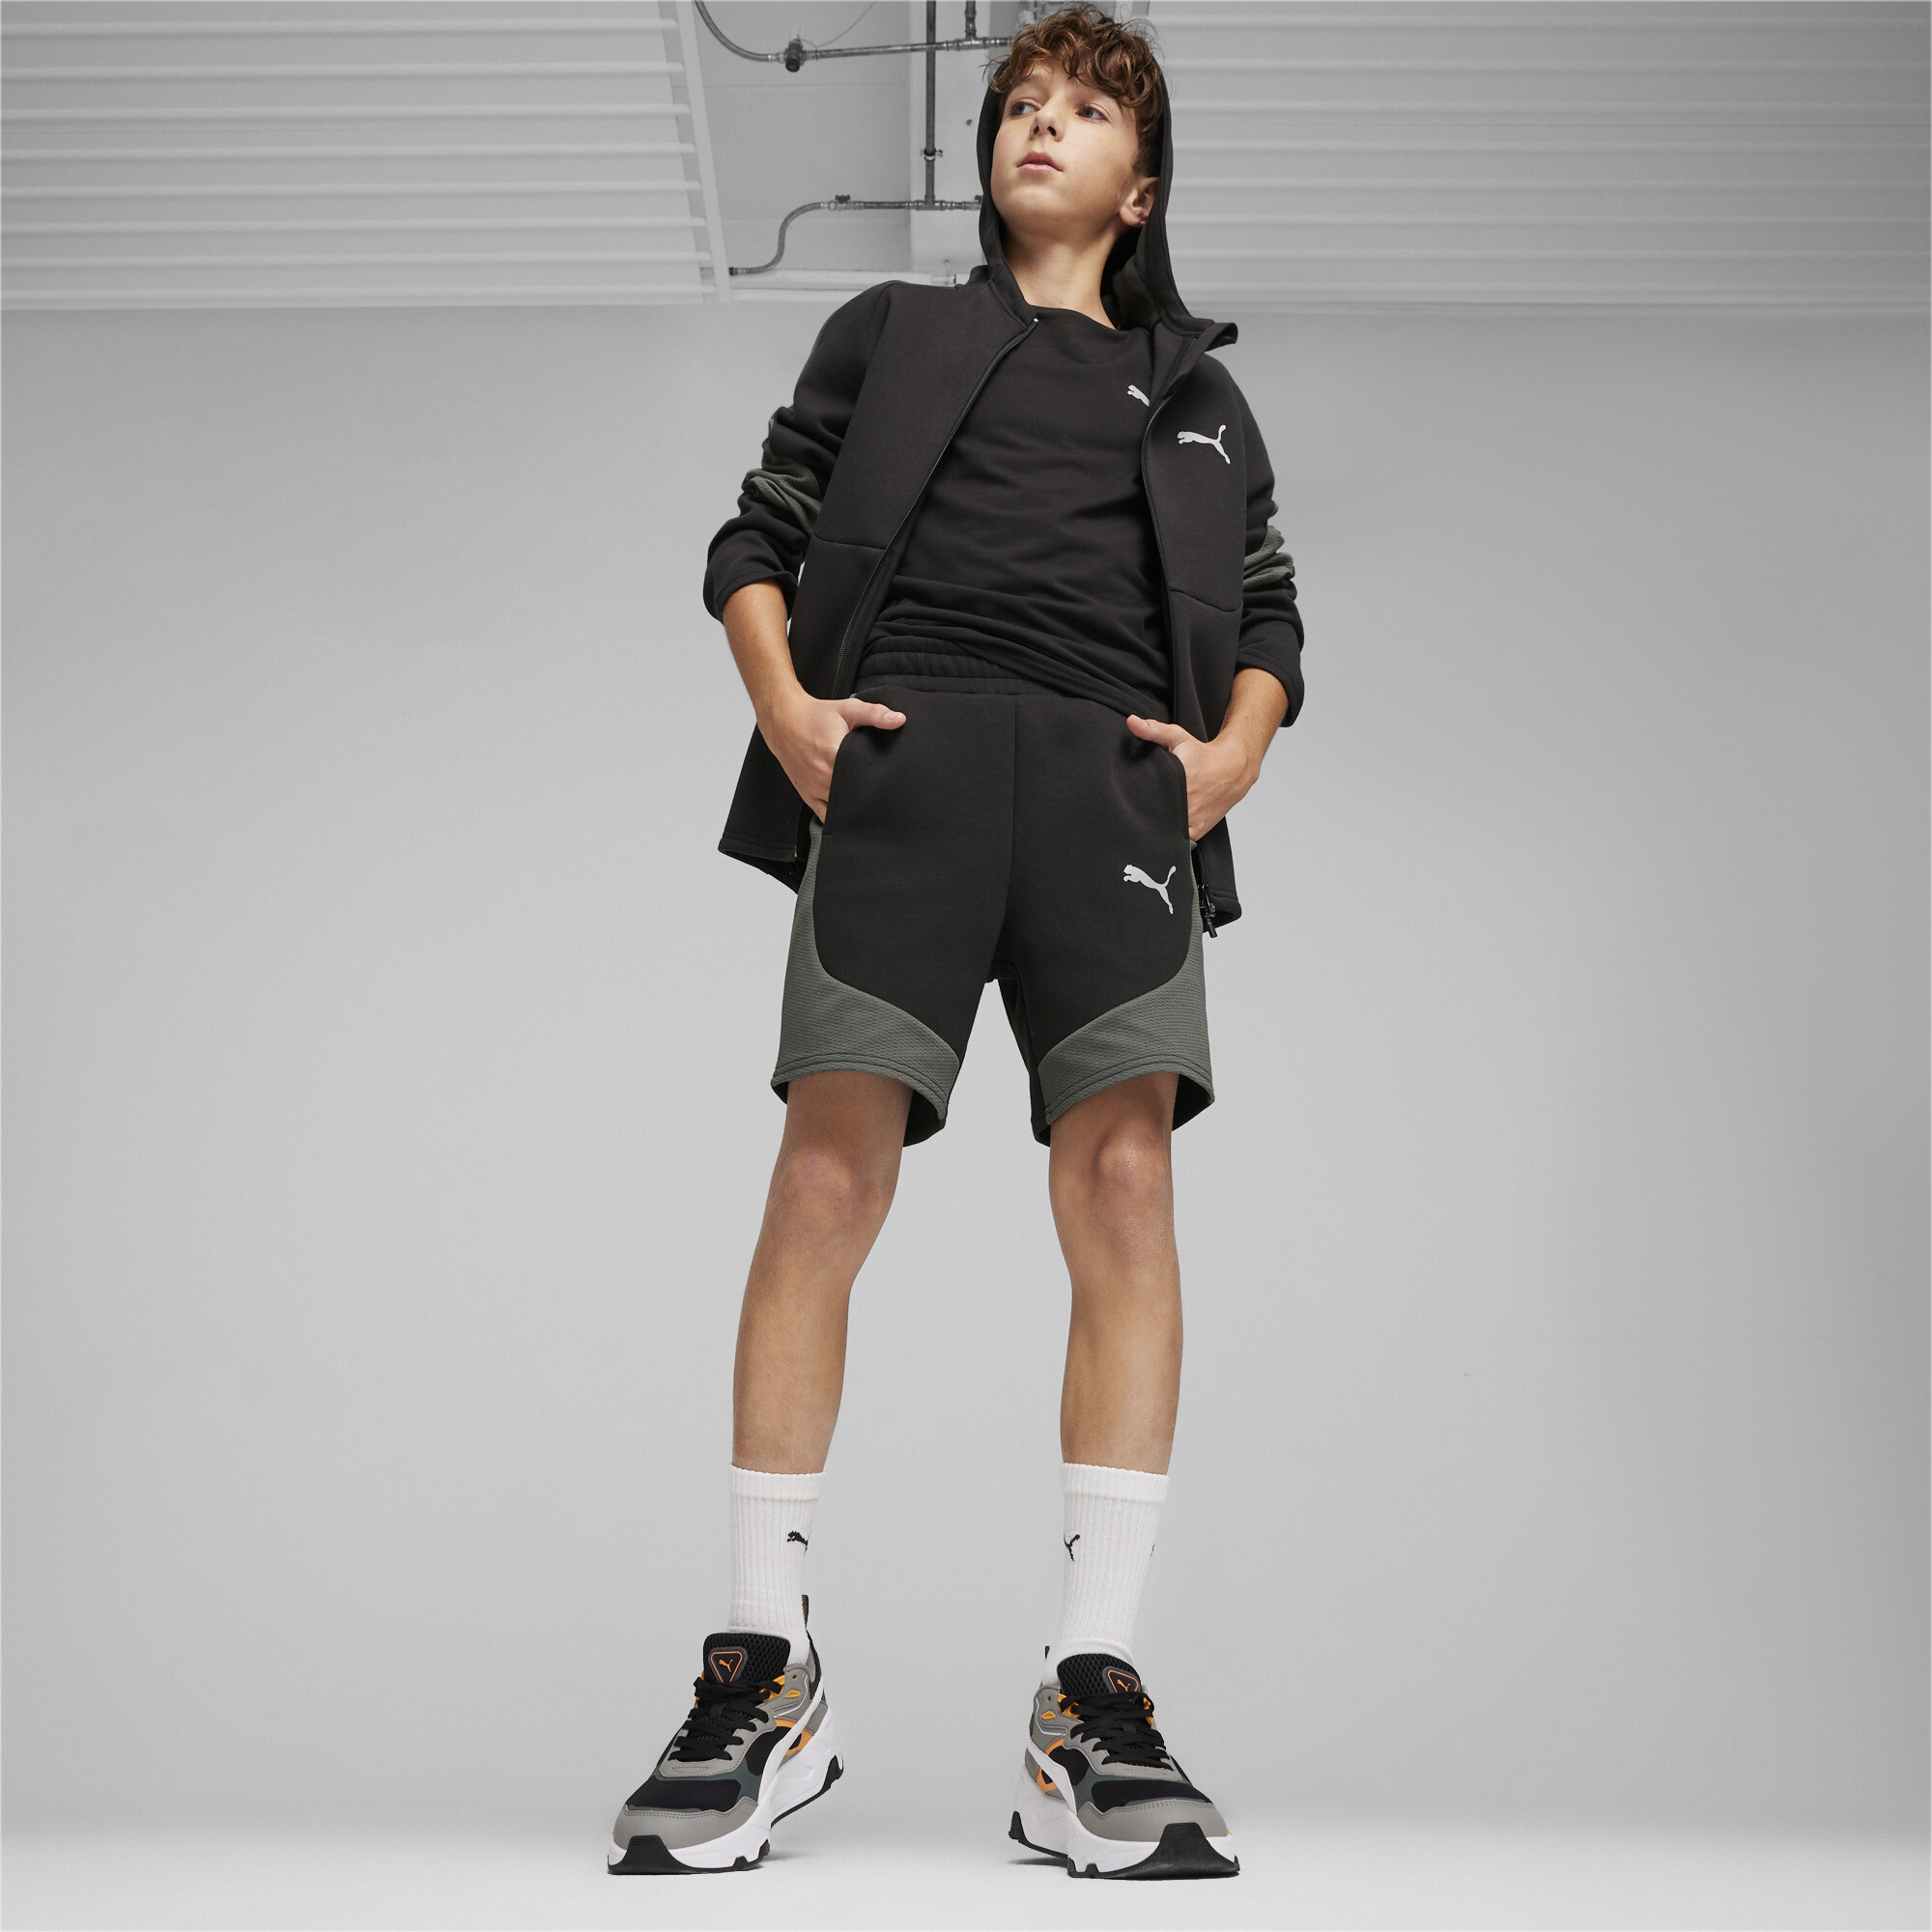 PUMA EVOSTRIPE Shorts In Black, Size 11-12 Youth